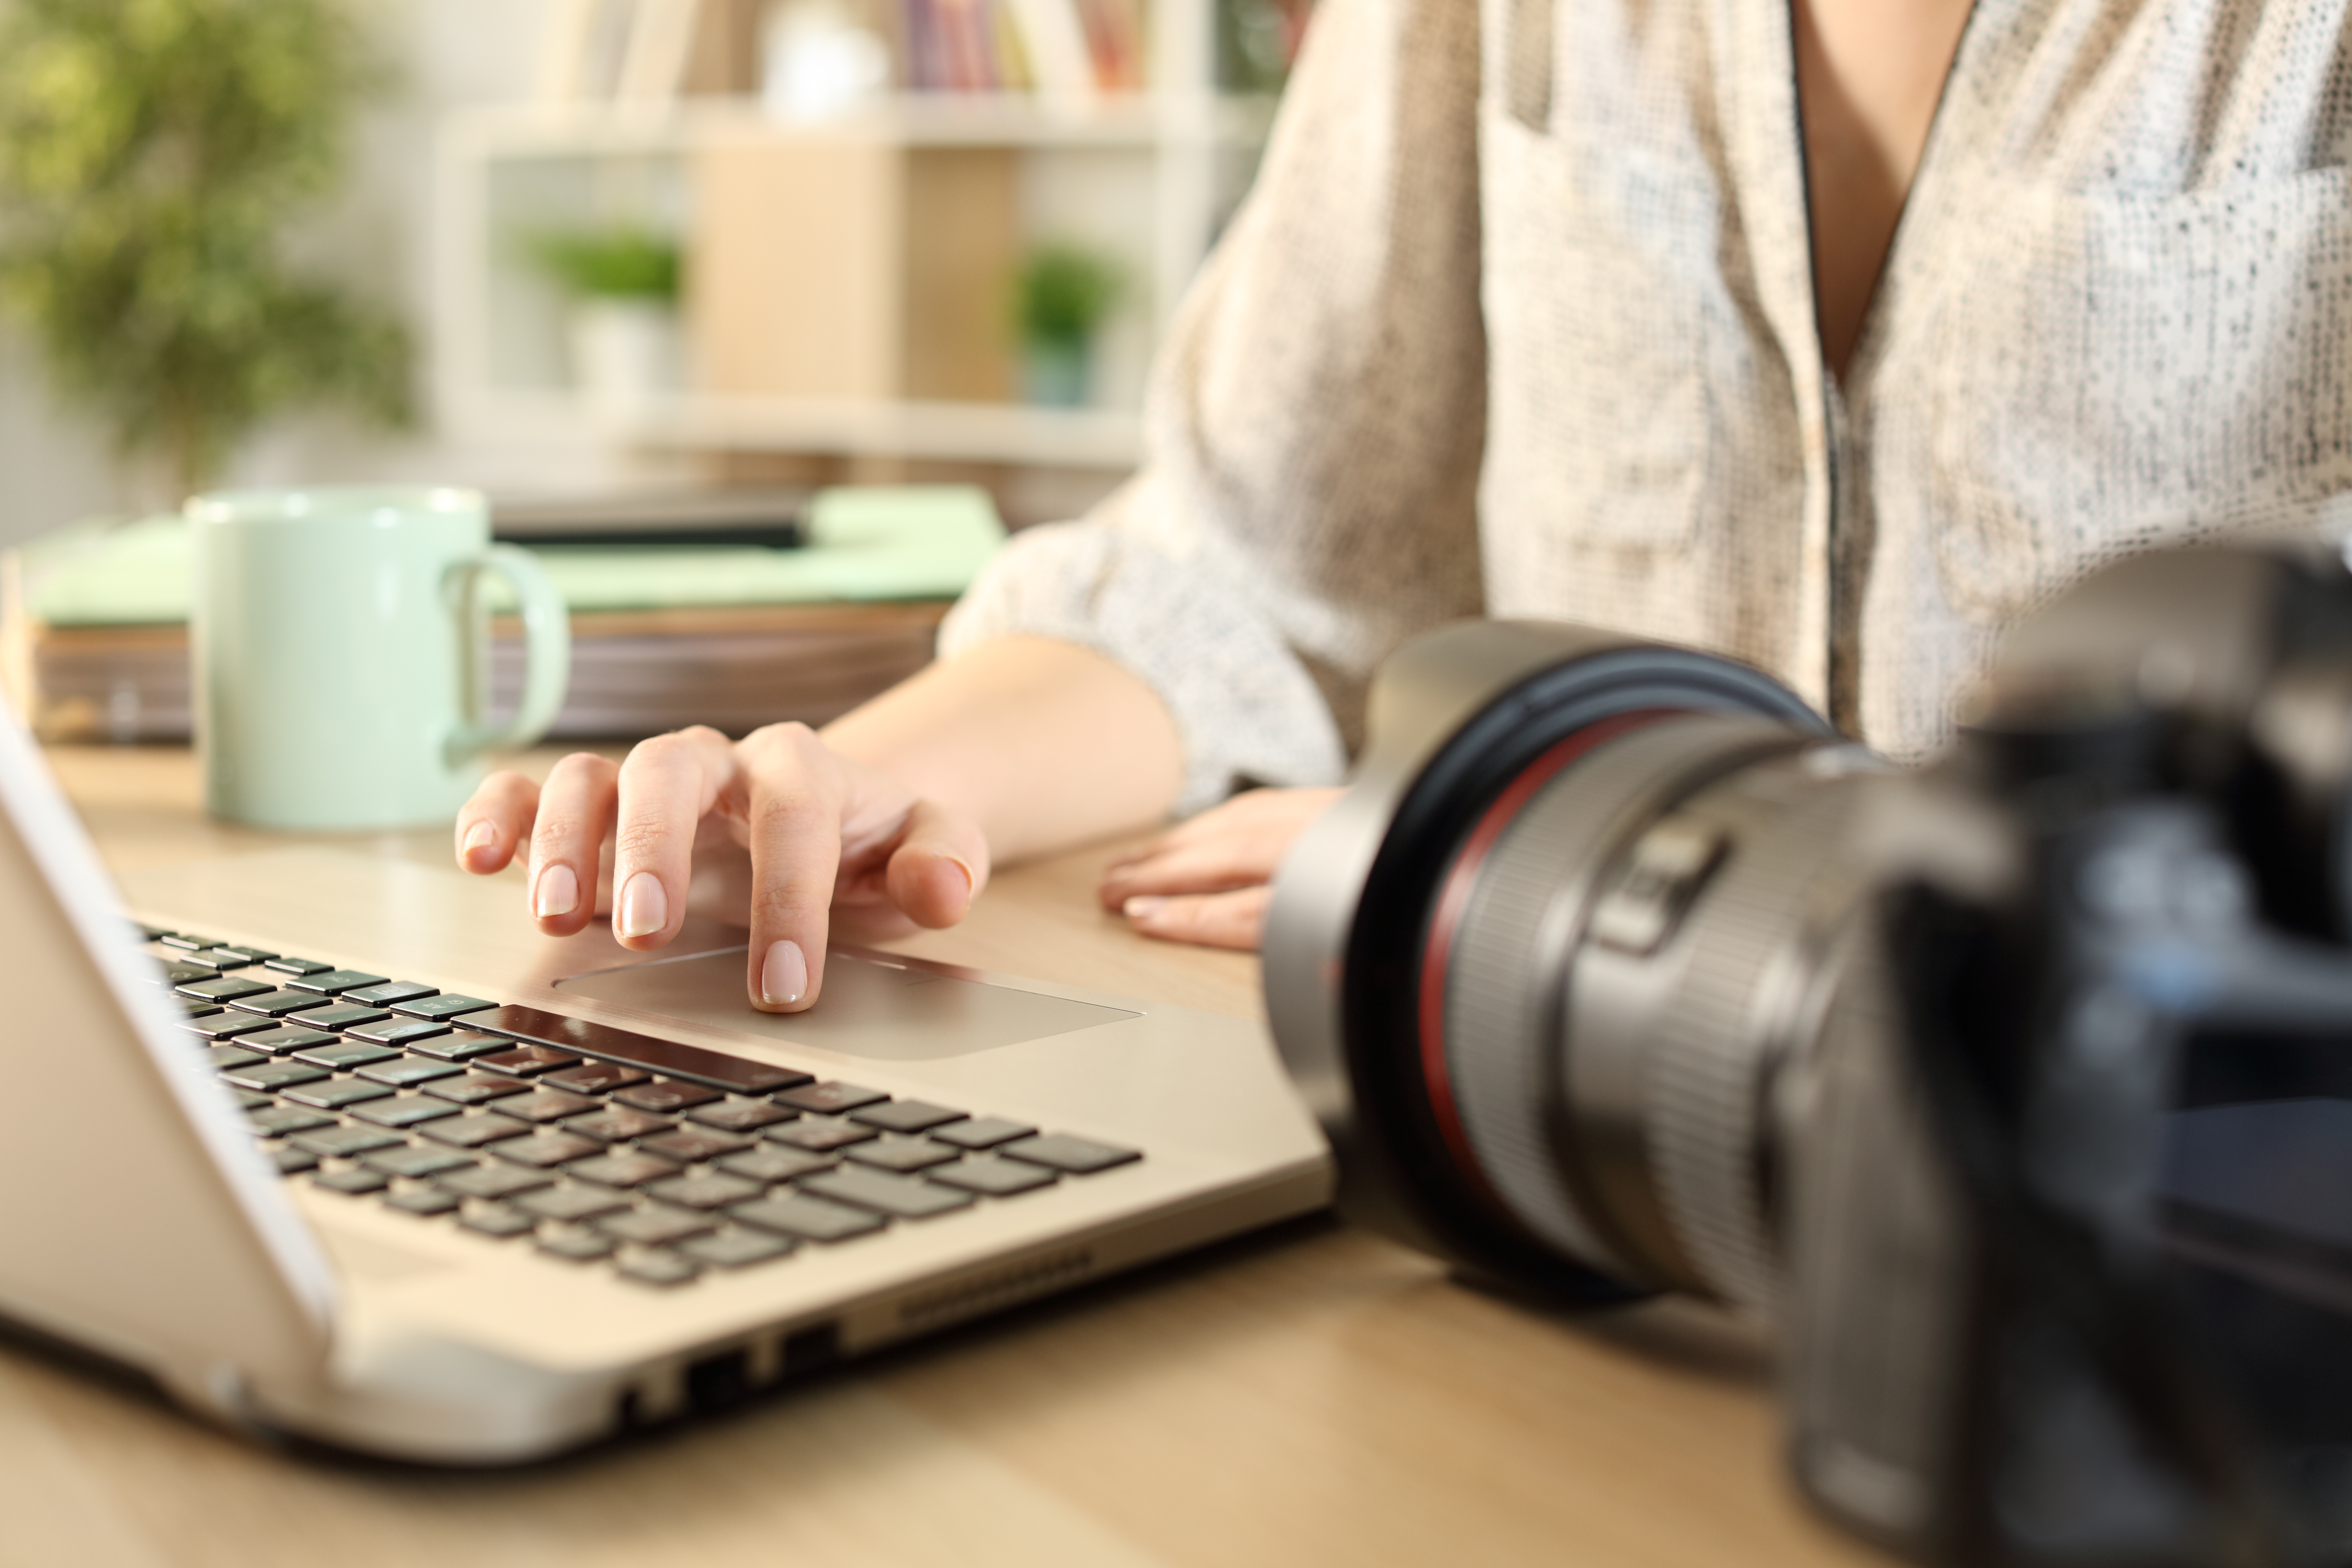 Woman types on laptop beside camera